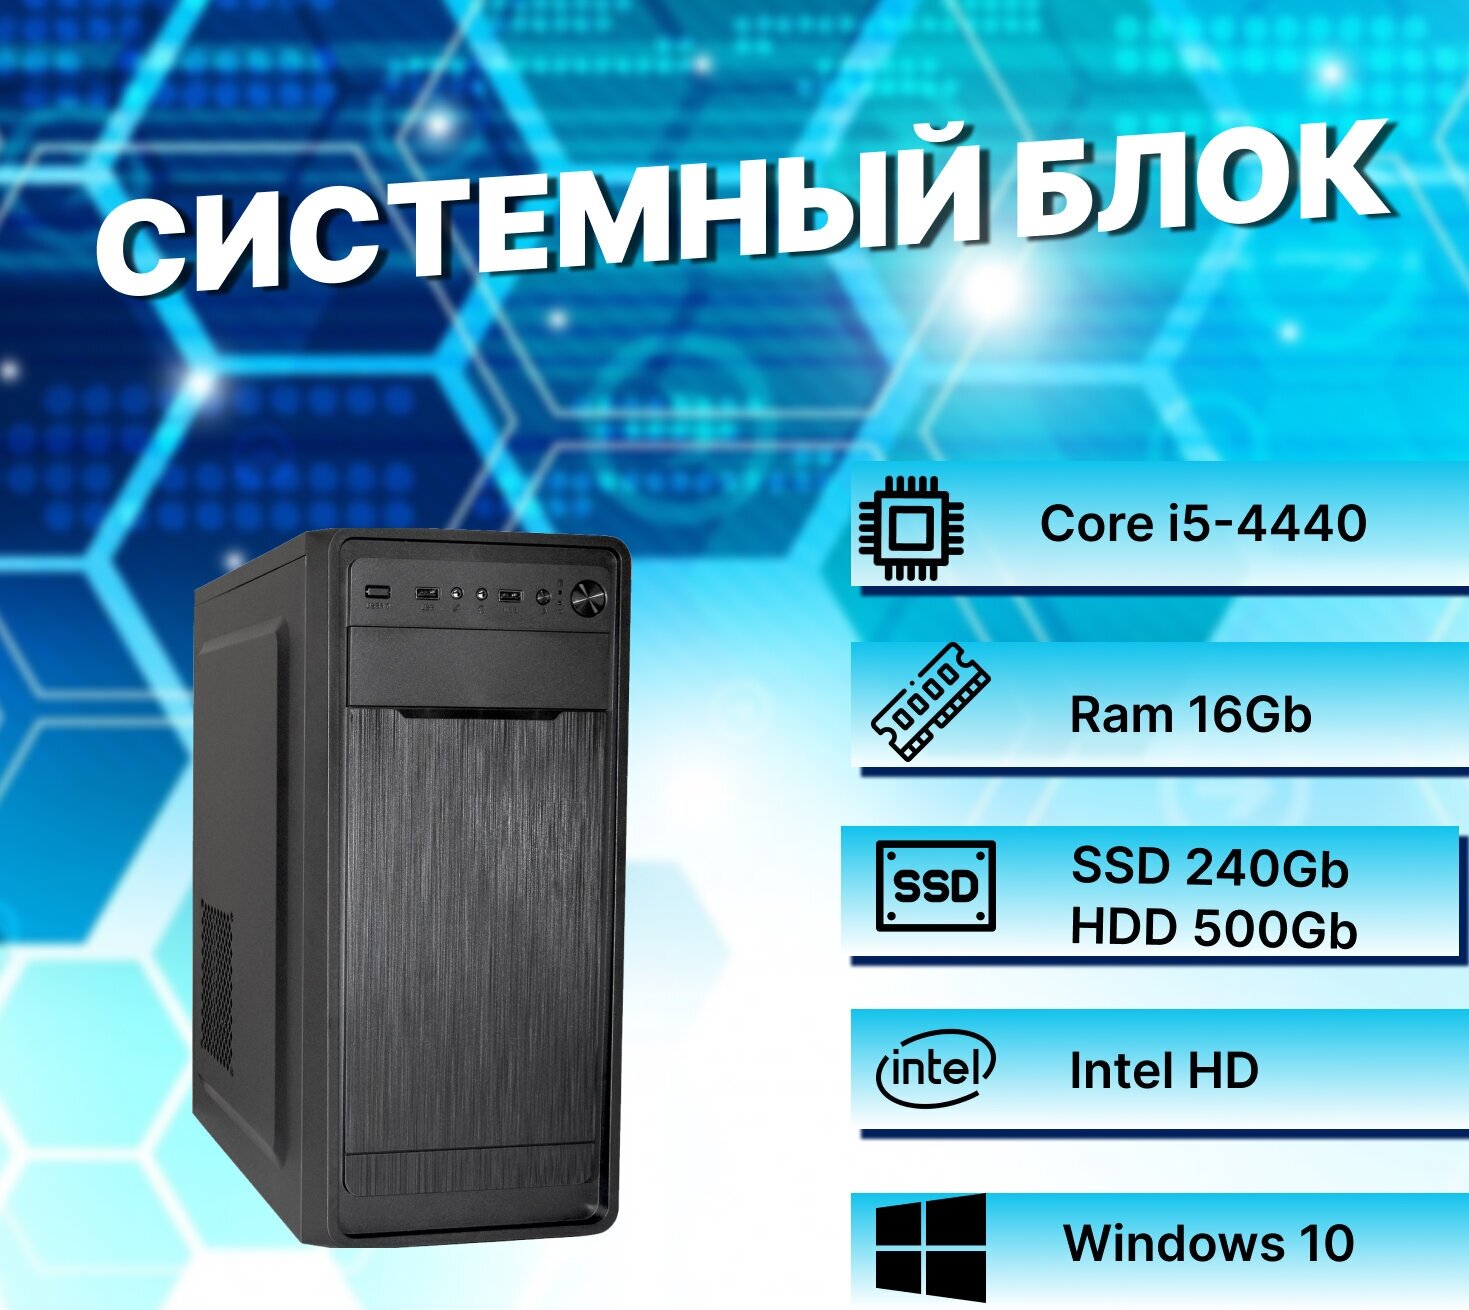 Системный блок Intel Core i5-4440 (3.1ГГц)/ RAM 16Gb/ SSD 240Gb/HDD 500Gb/ Intel HD/ Windows 10 Pro